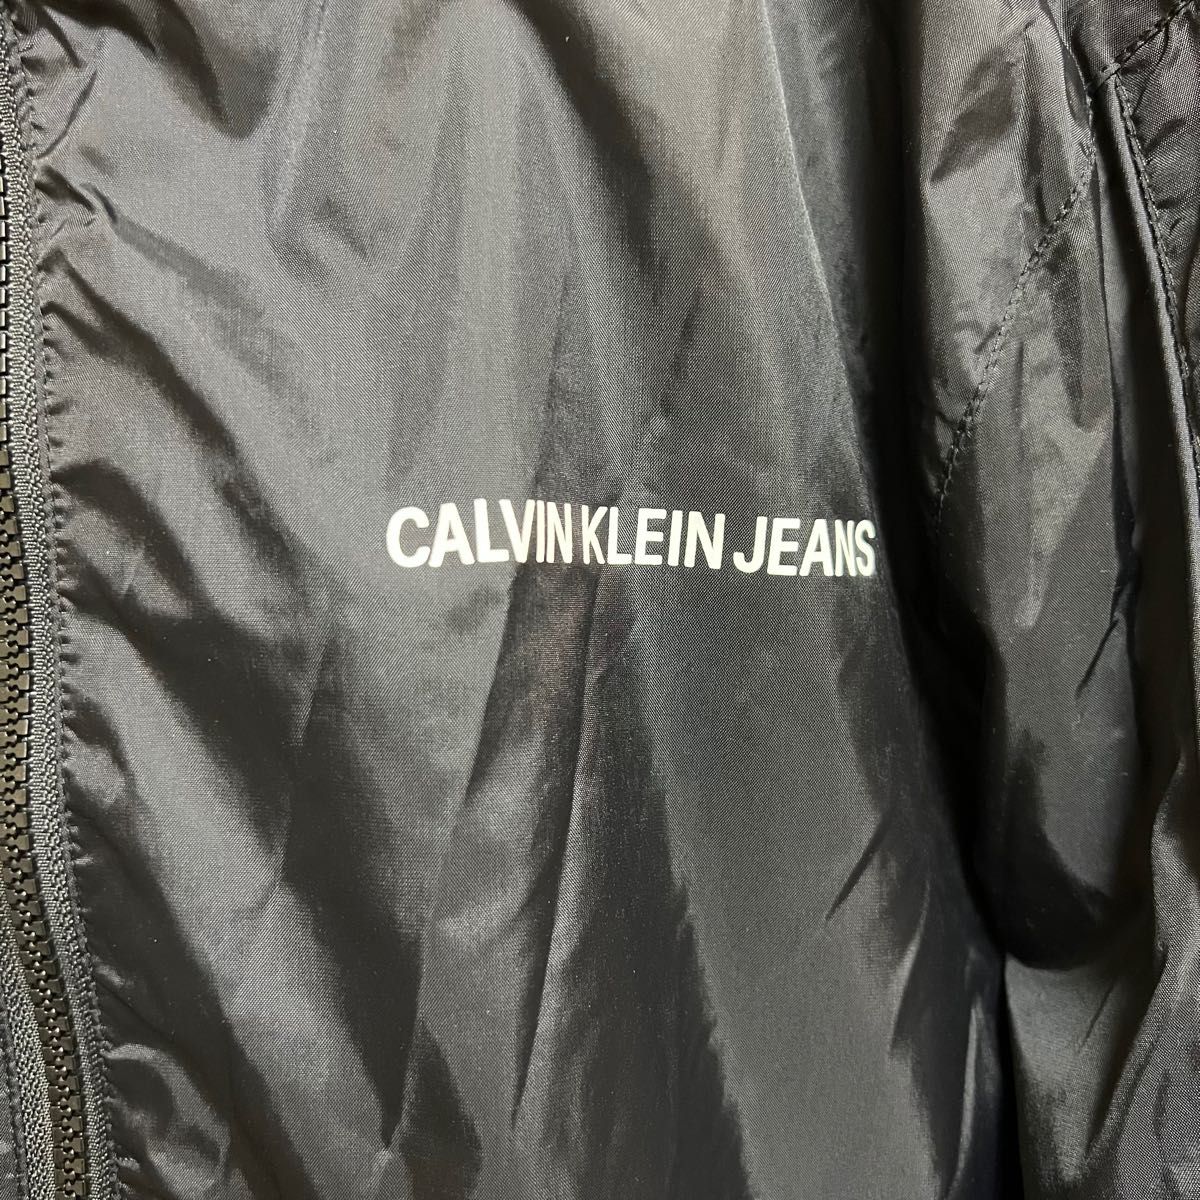 27 CALBINKLEINJEANS(カルバンクラインジーンズ) ナイロンジャケット メンズ  Sサイズ